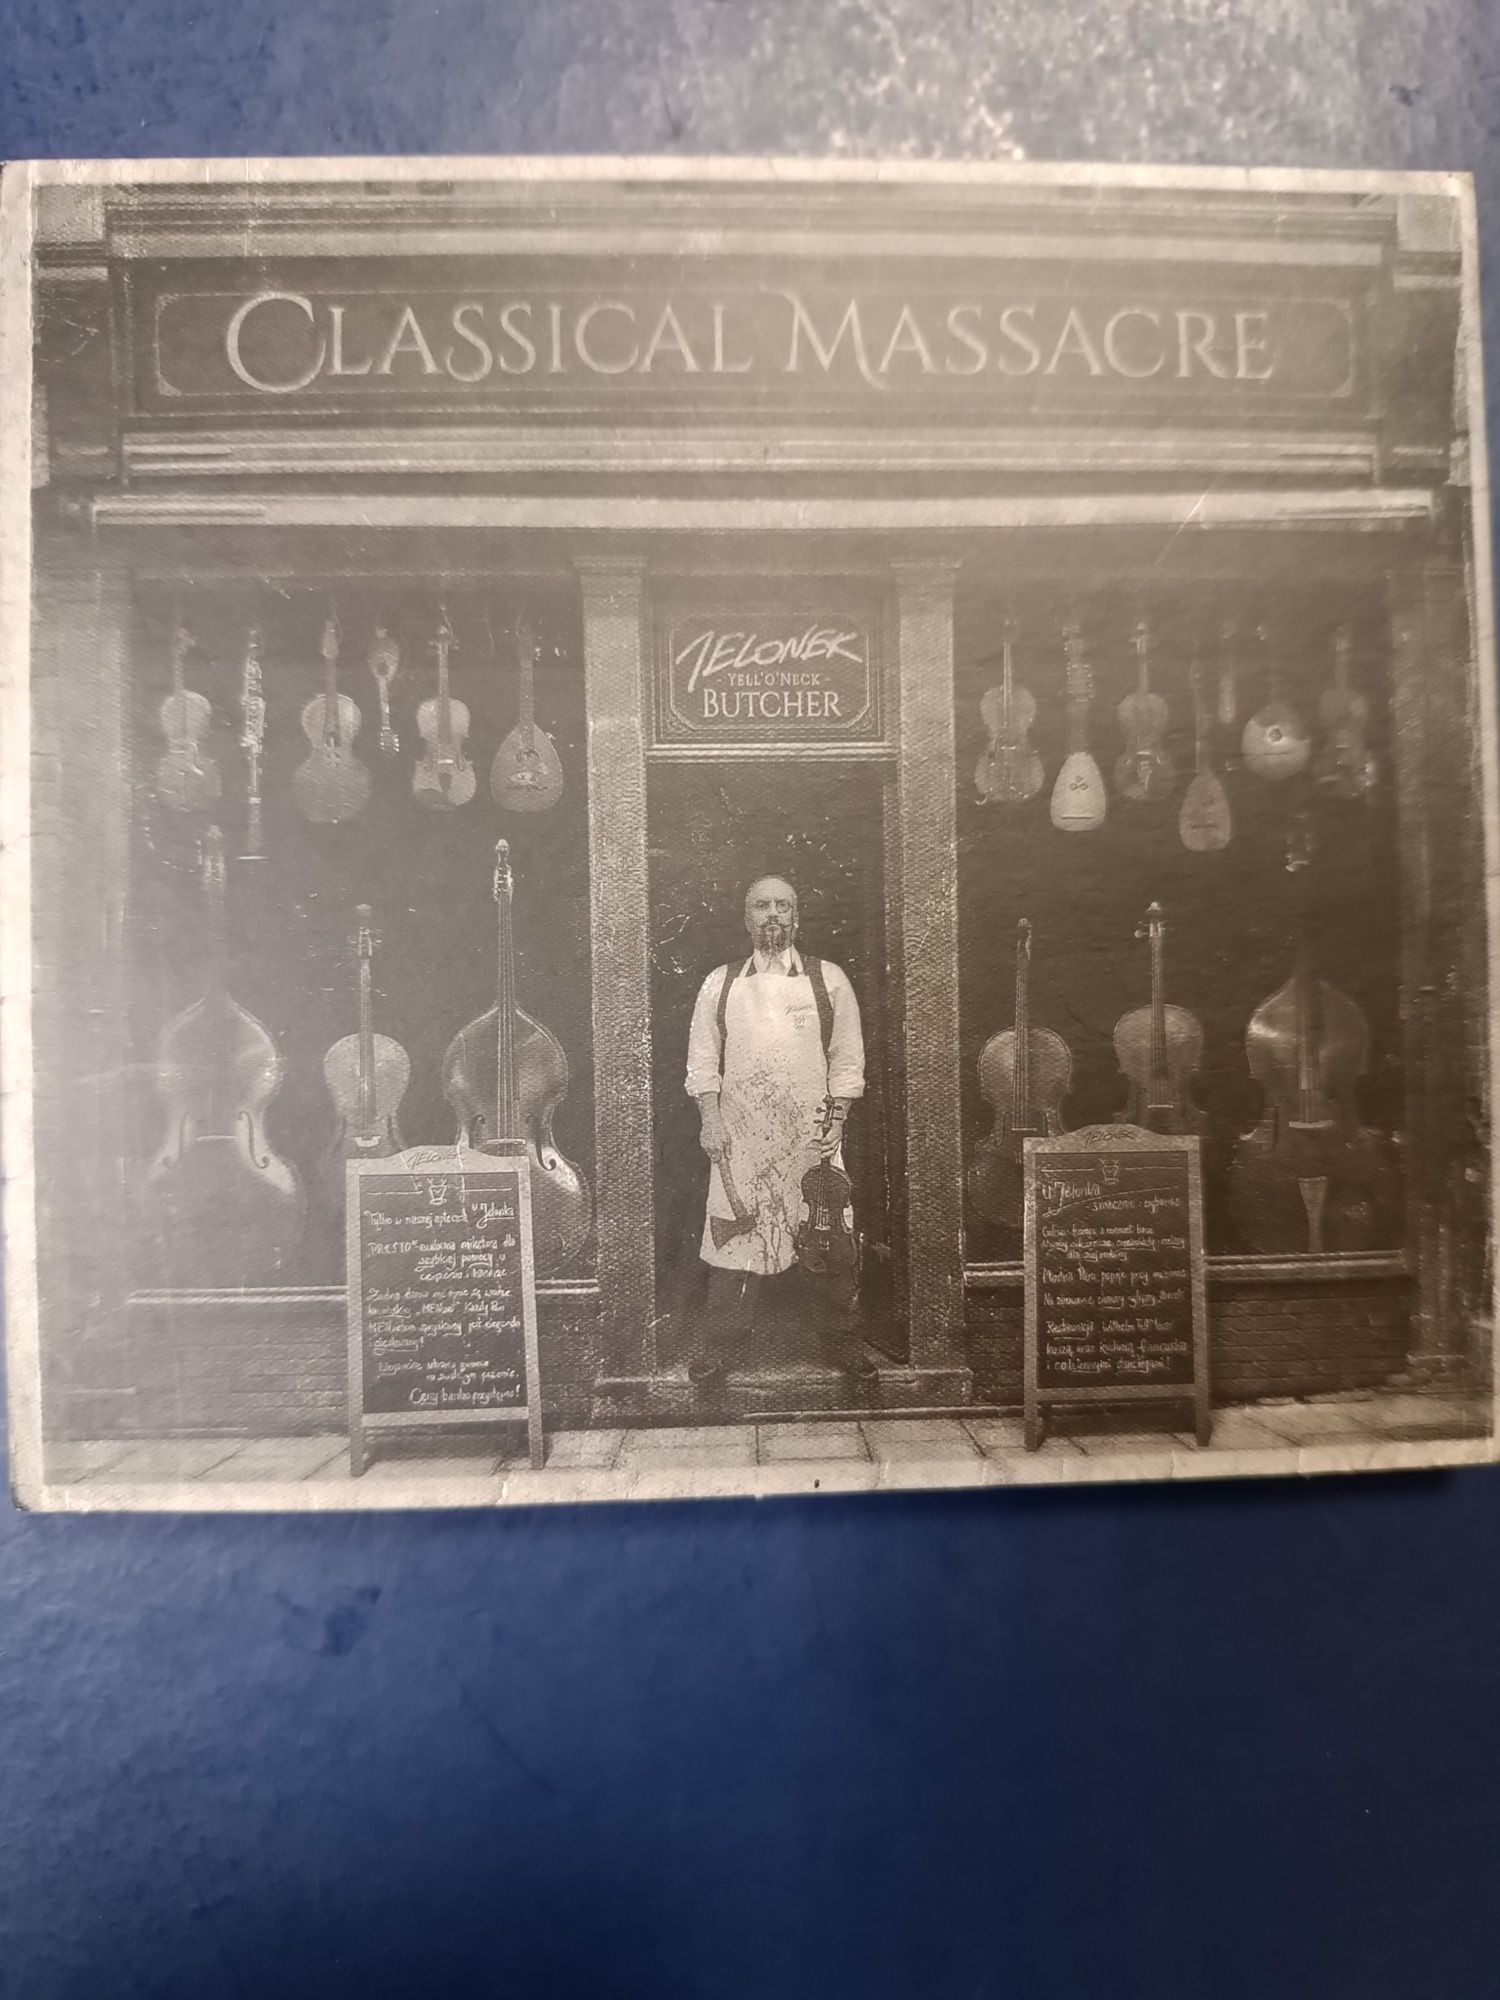 Jelonek - Classical Massacre